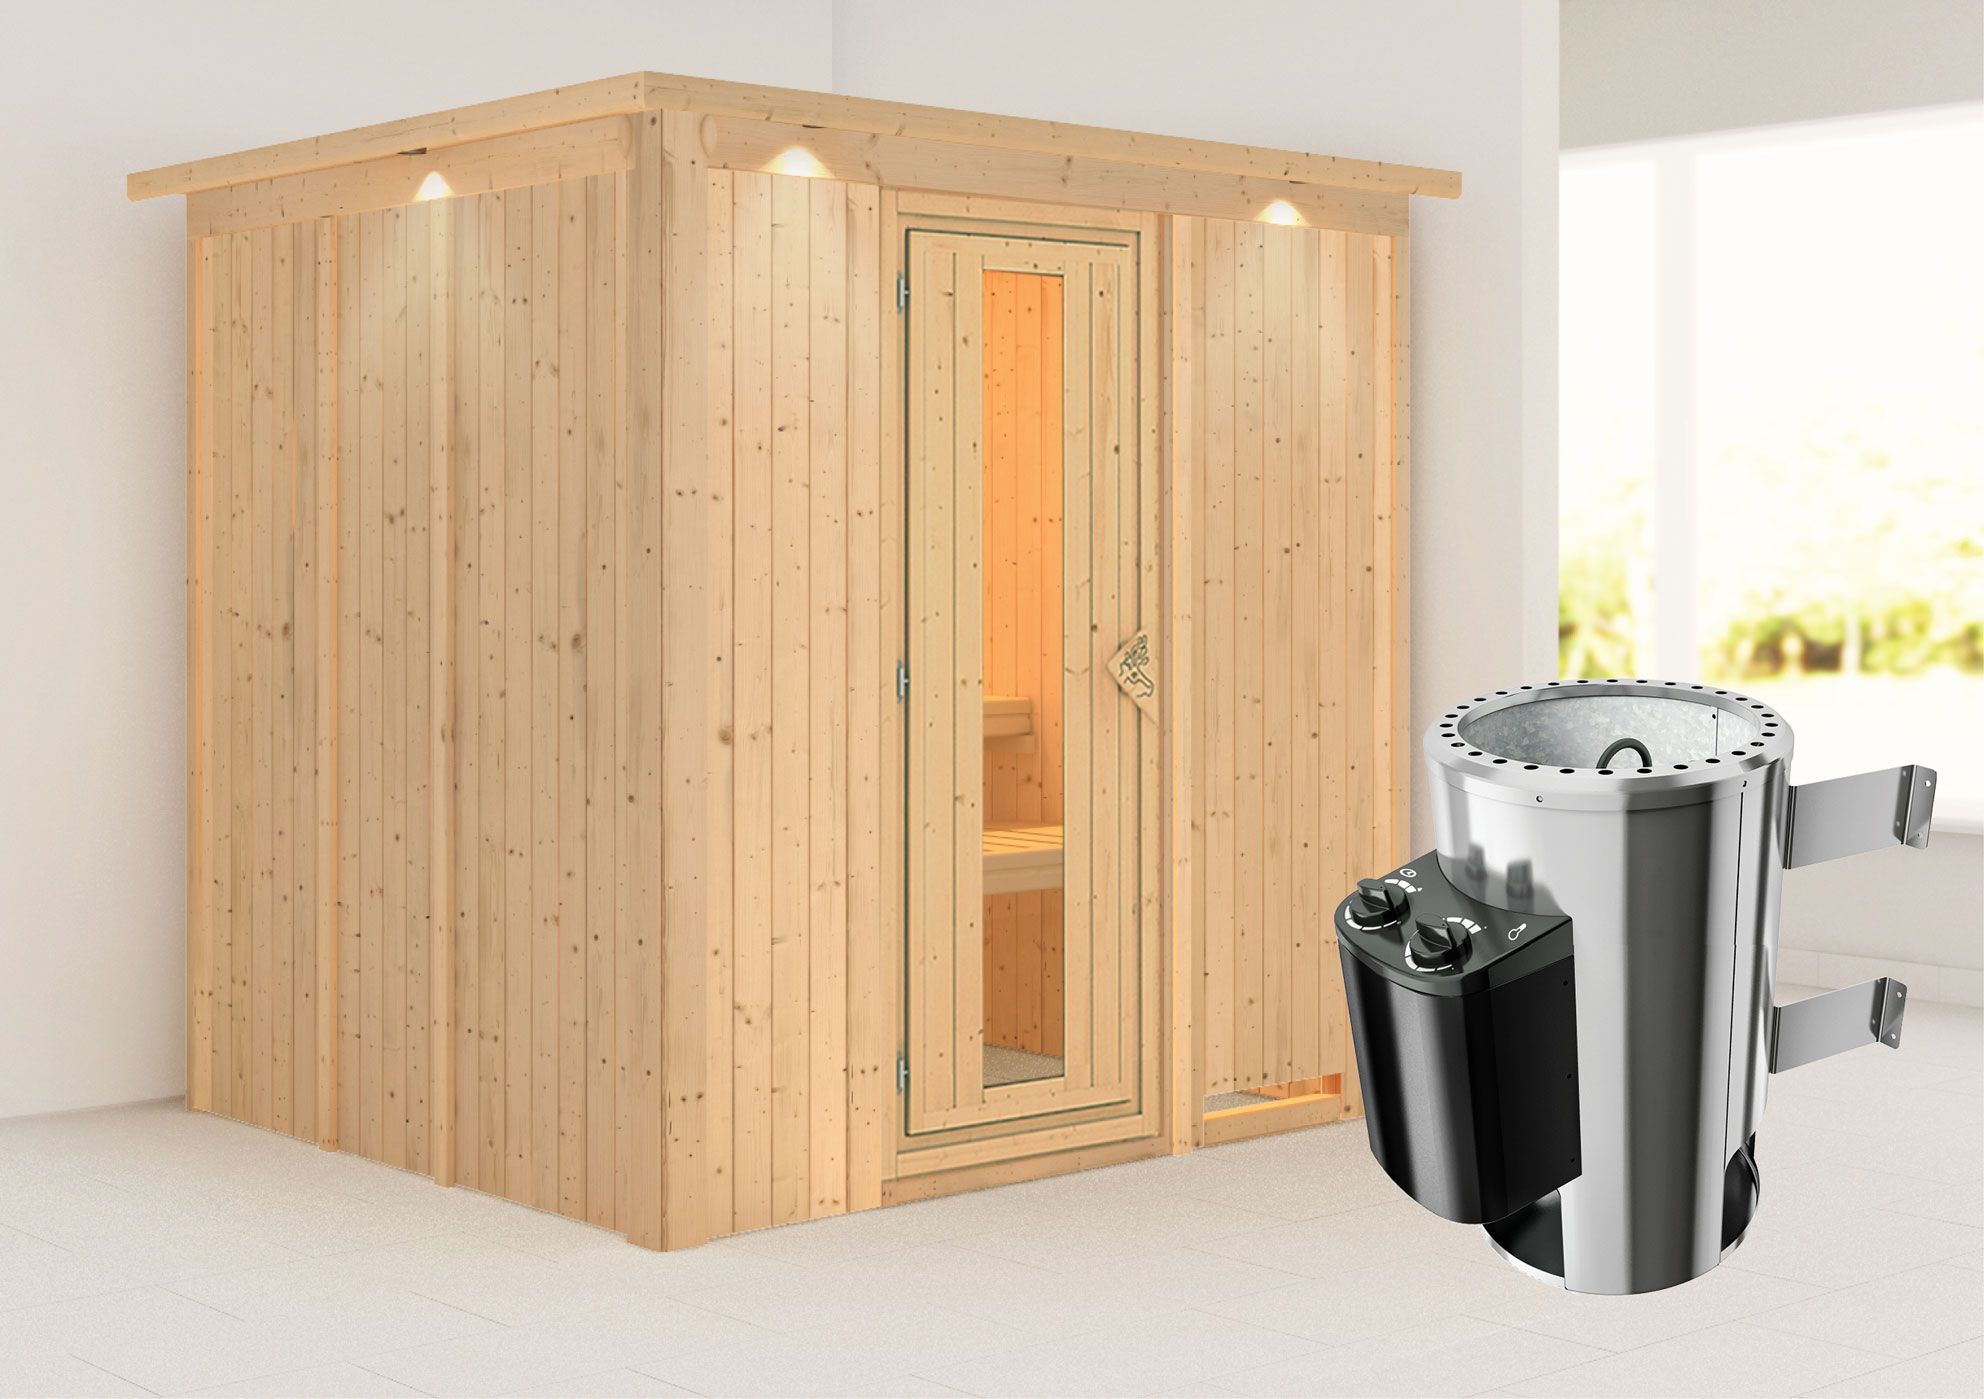 Sauna "Agnar" SET met energiebesparende deur, kroon en kachel 3,6 kW - 210 x 184 x 202 cm (B x D x H)